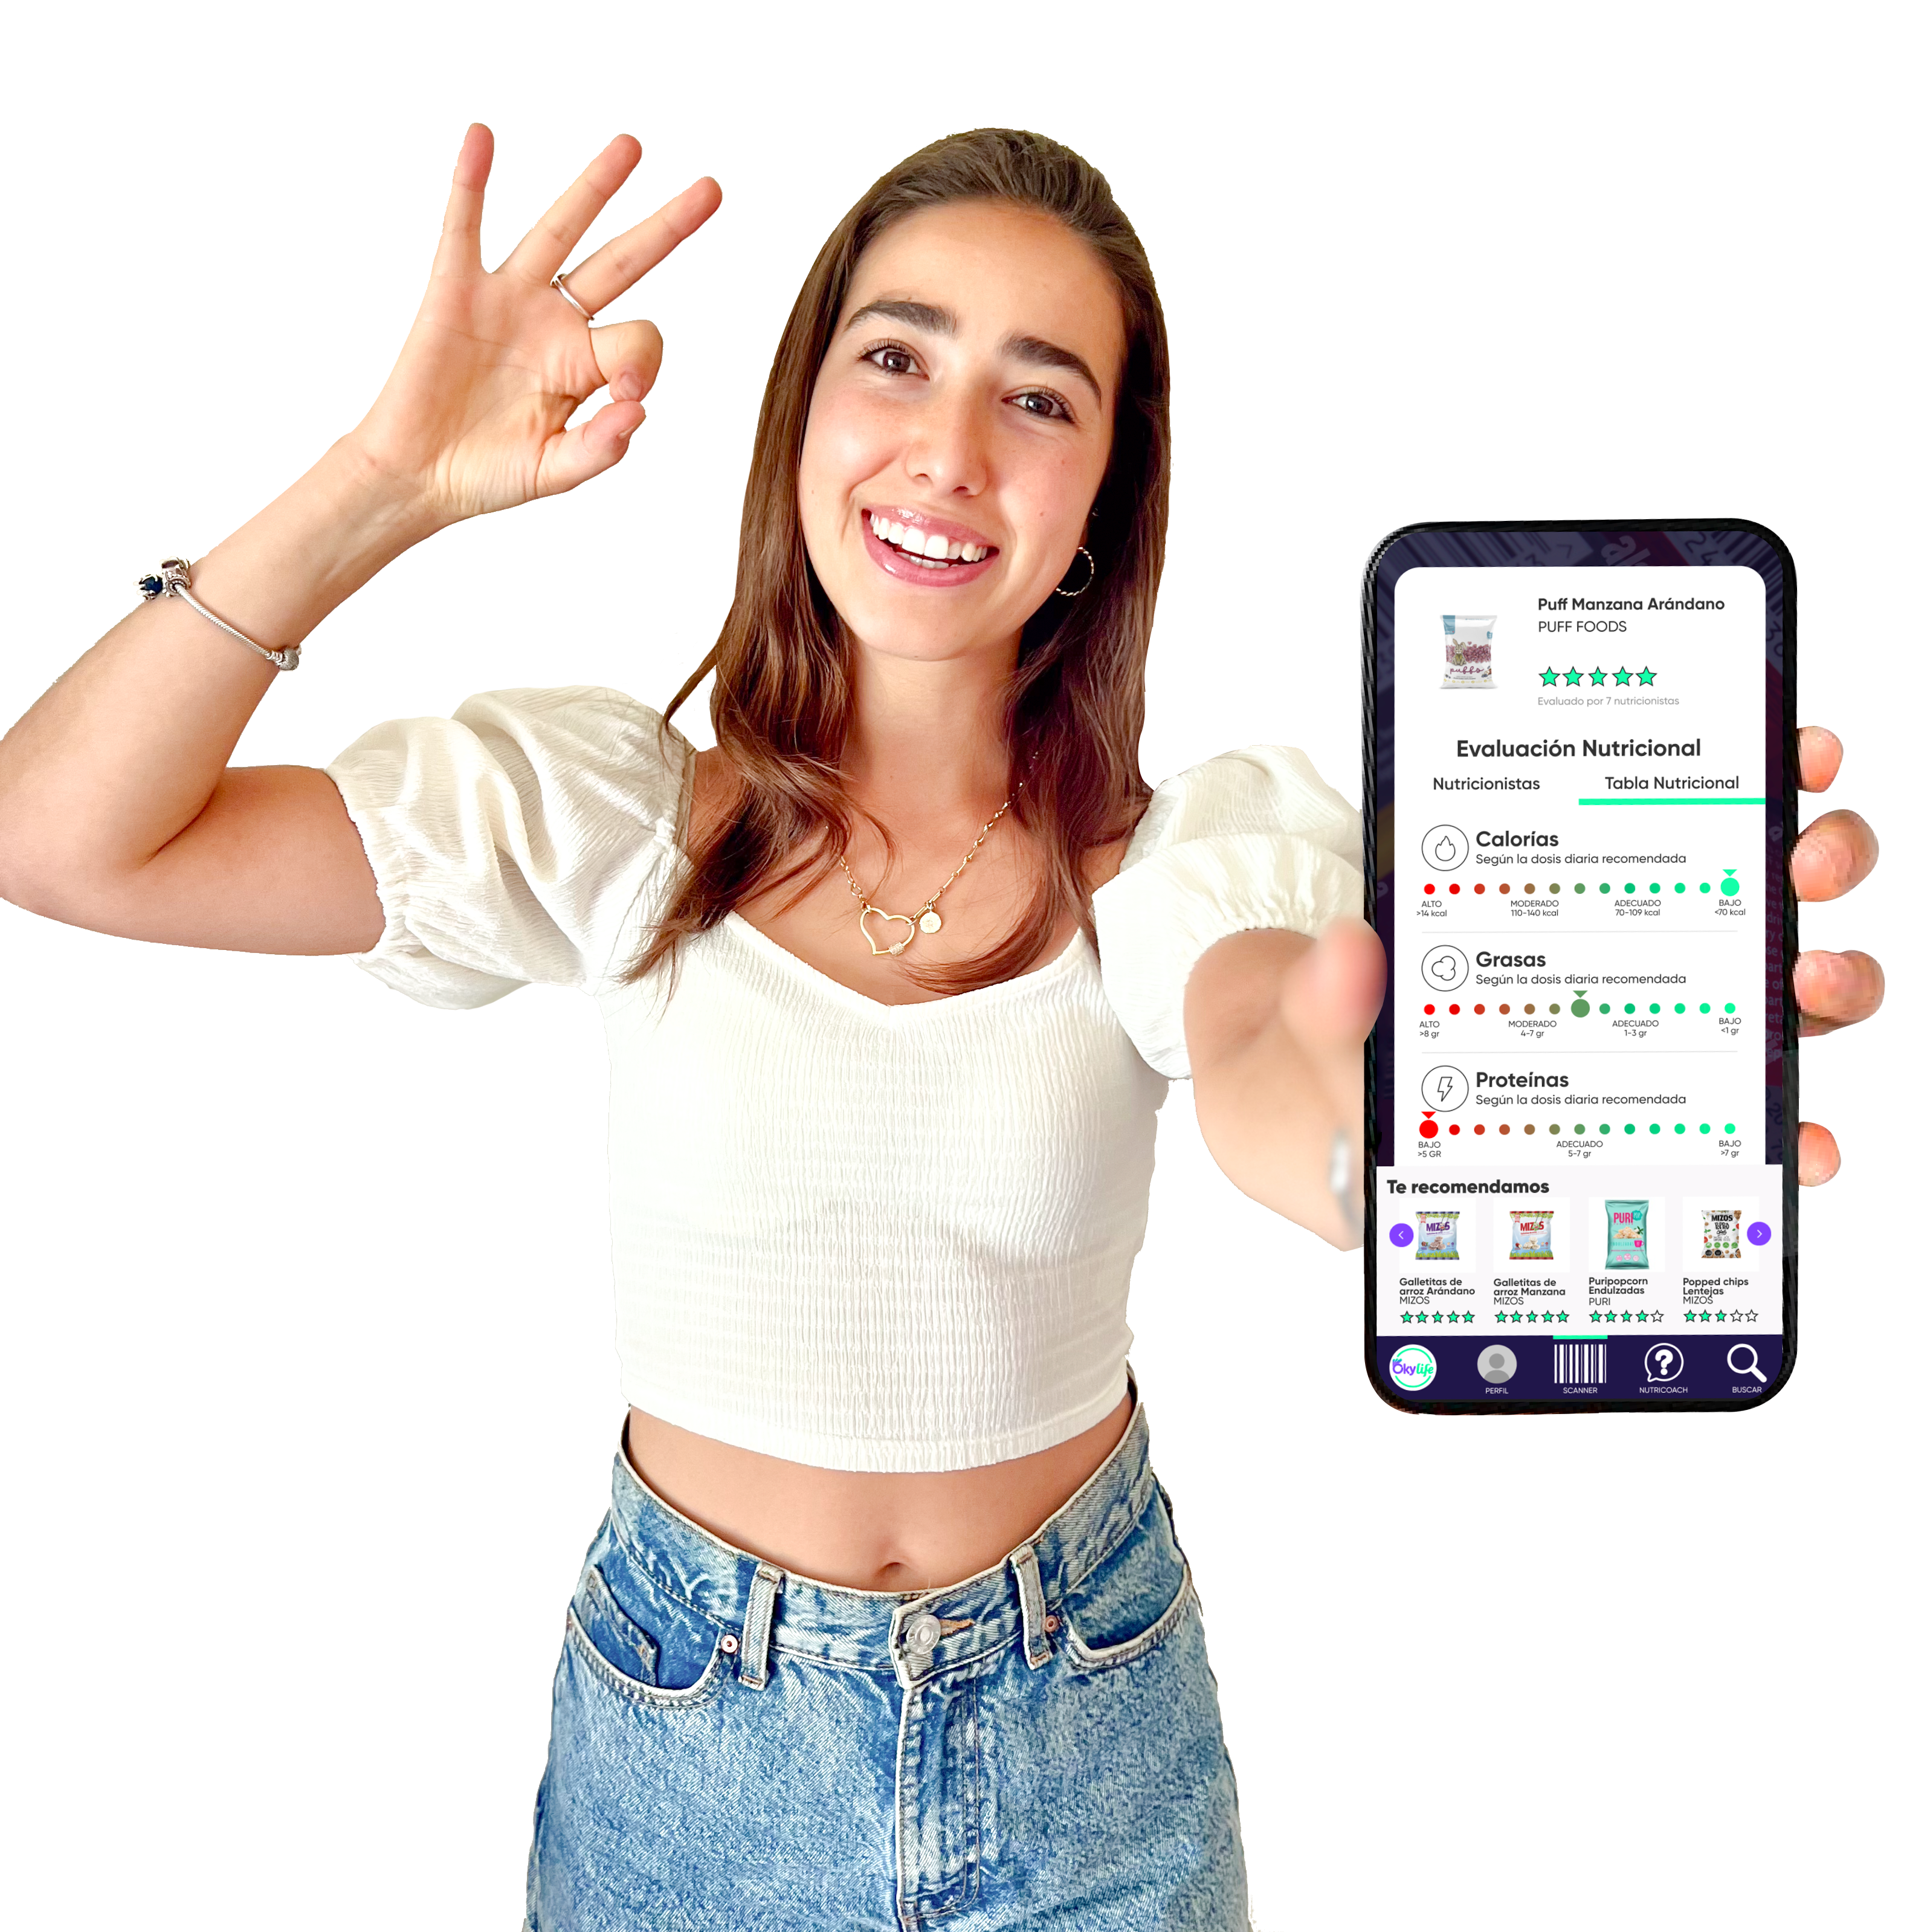 Romina mostrando app